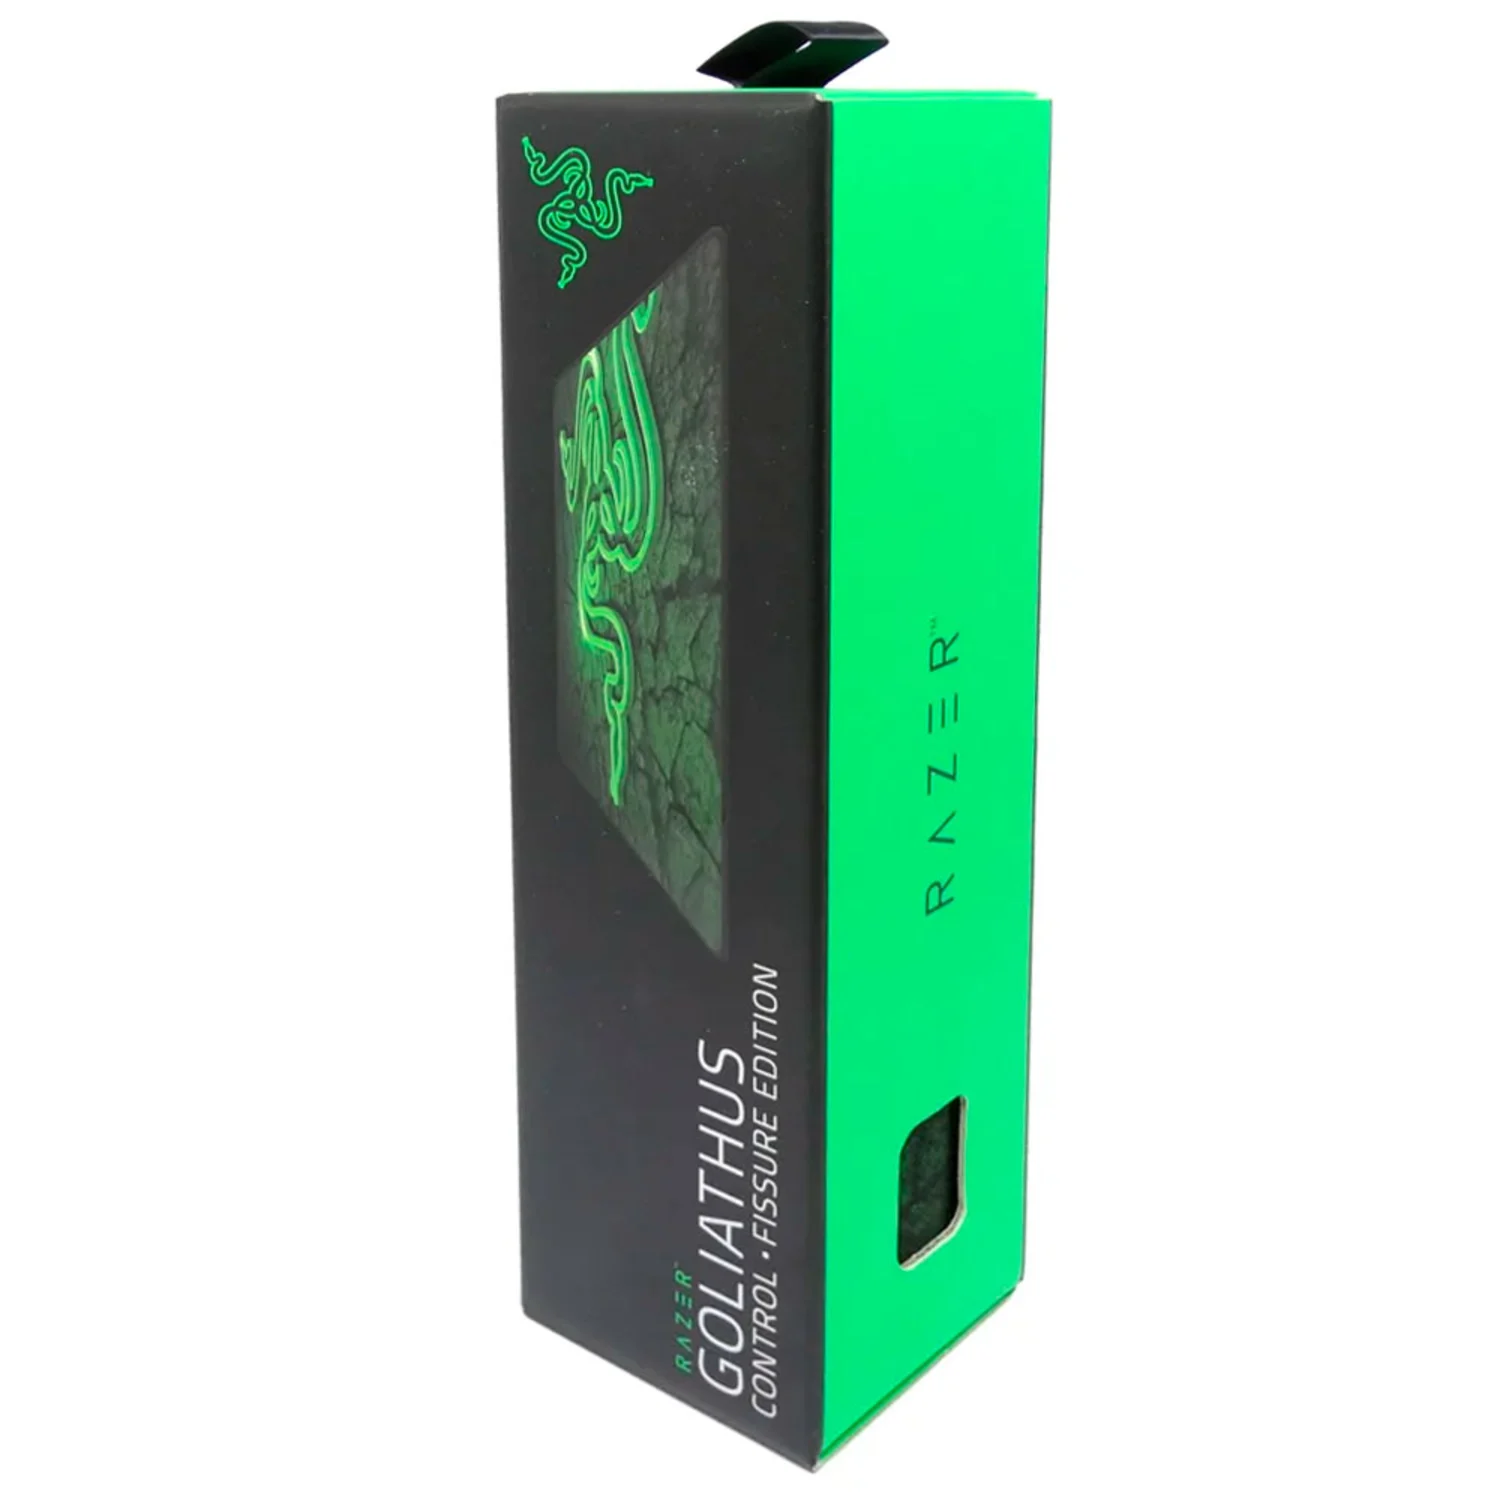 Mousepad Gamer Razer Goliathus Fissure Control / Pequeno - Verde